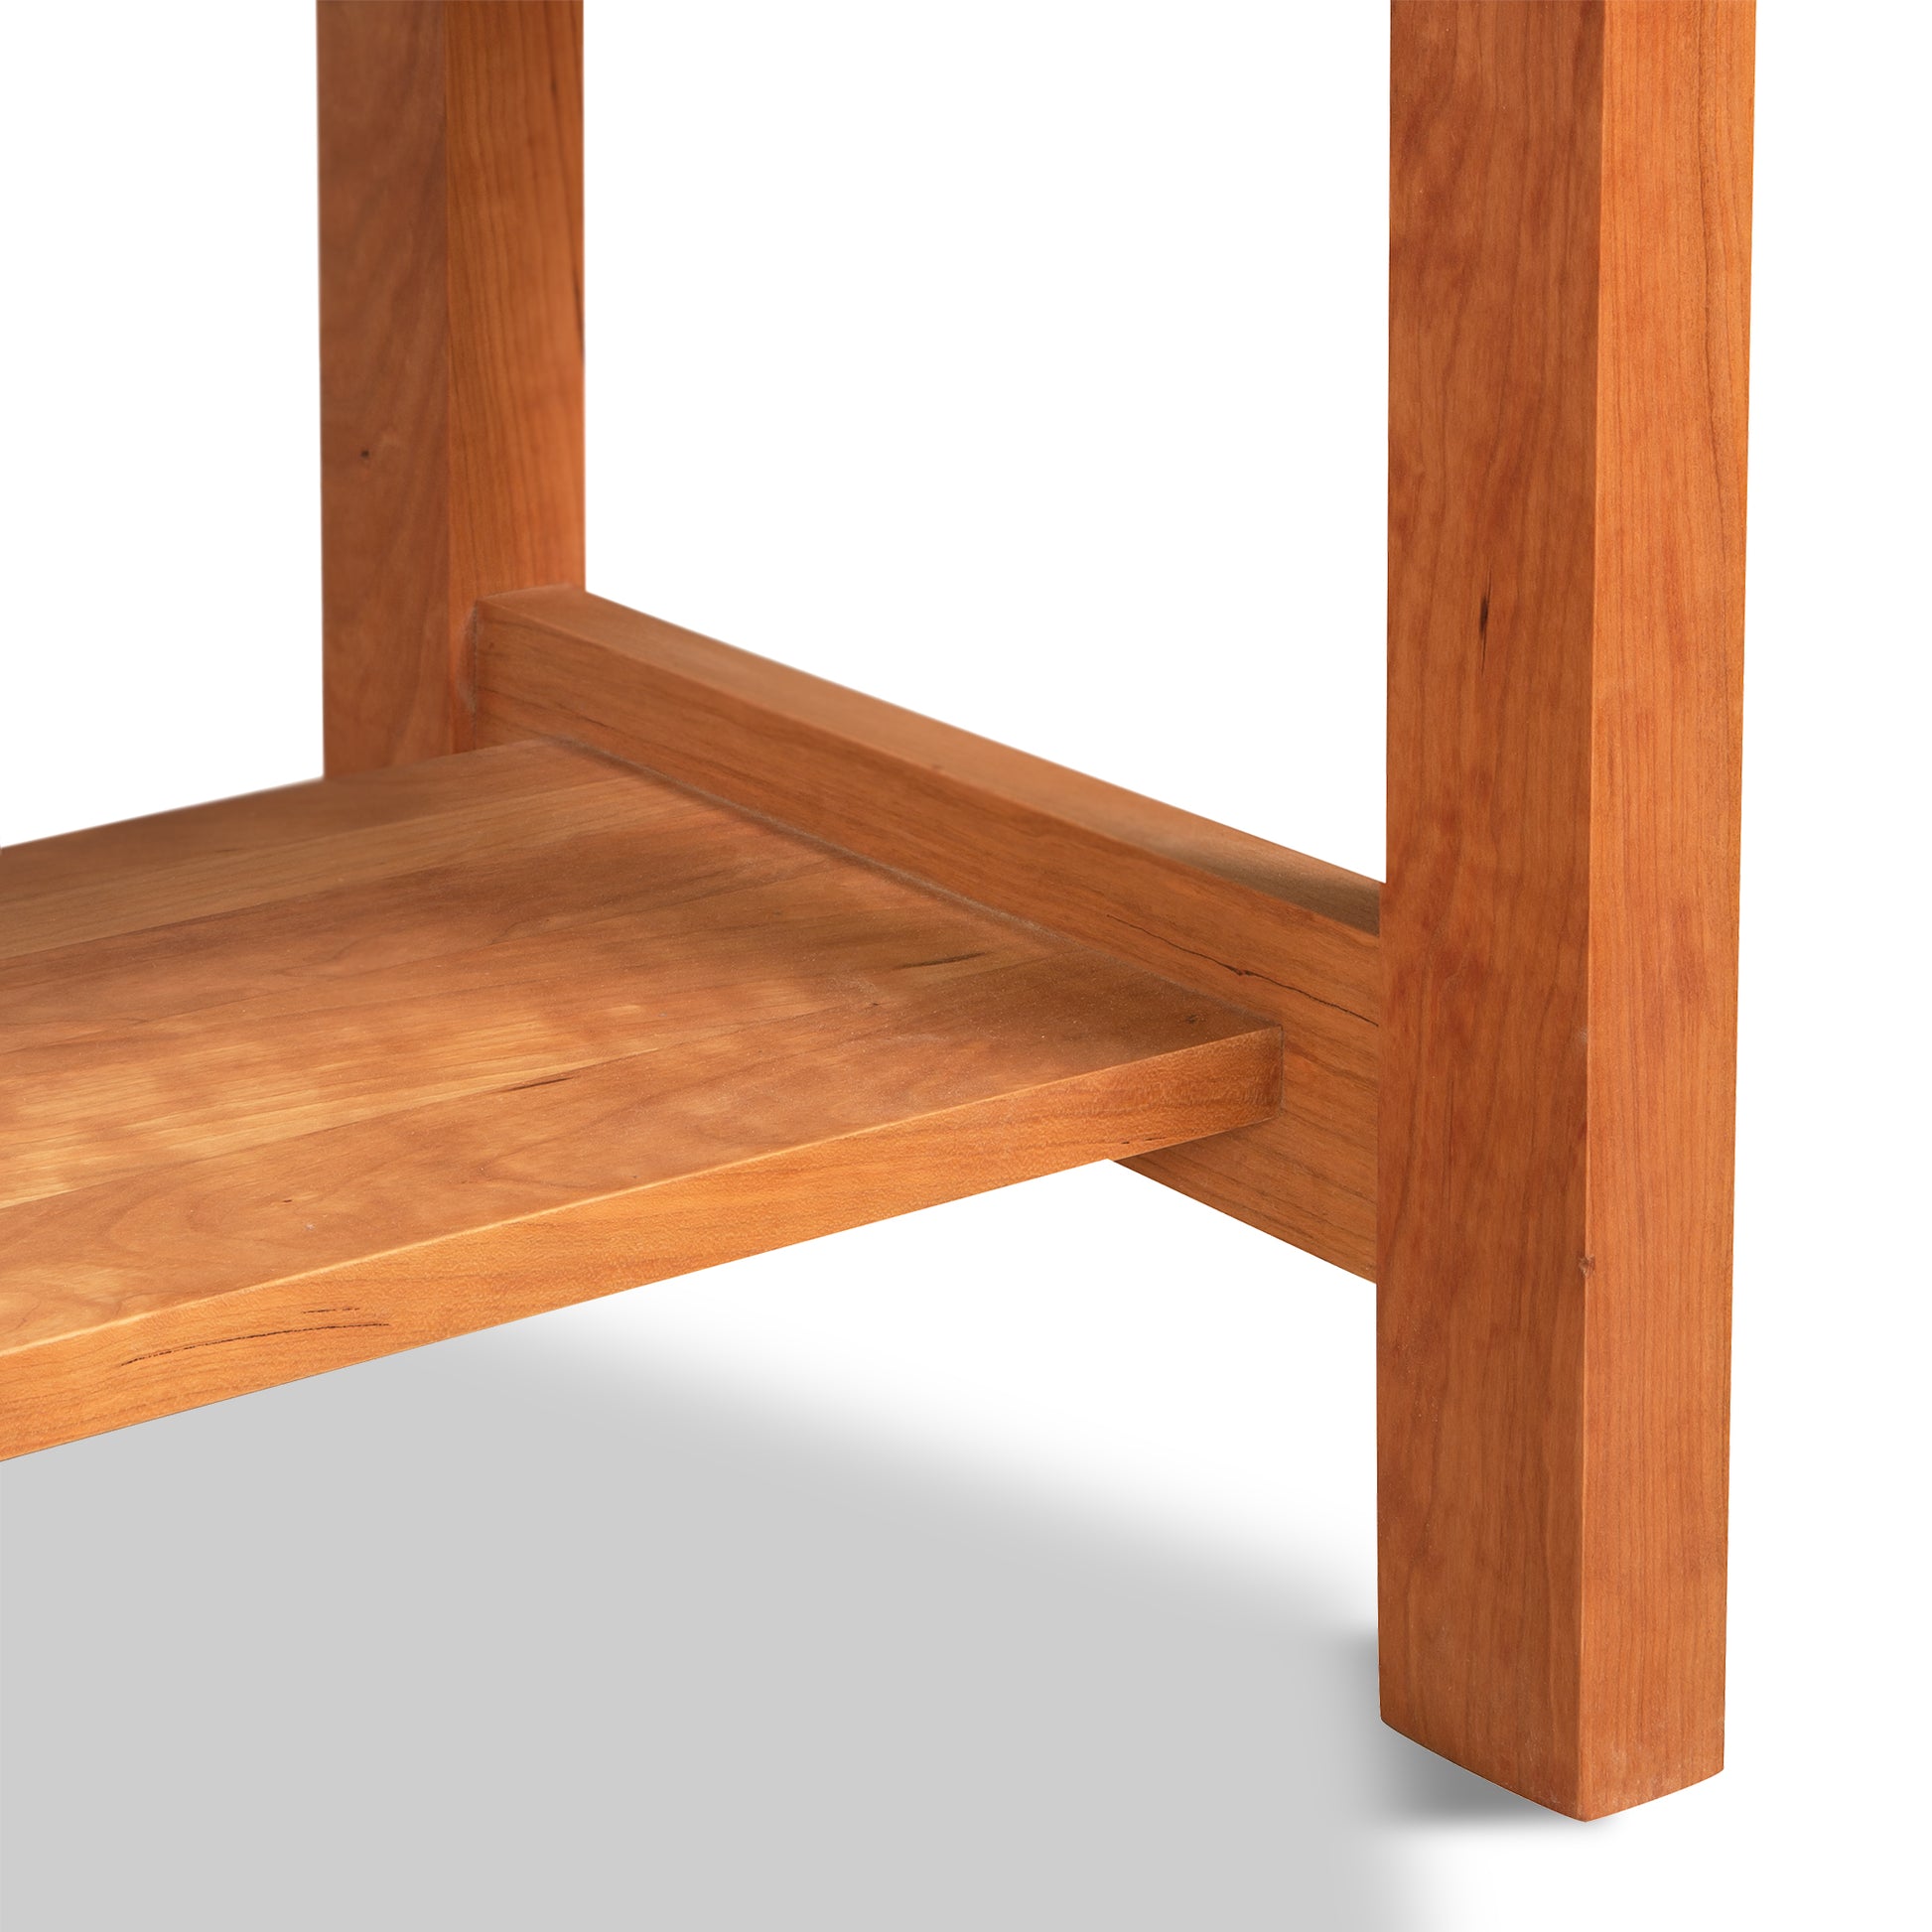 A Vermont Furniture Designs Burlington Shaker 2-Drawer coffee table.